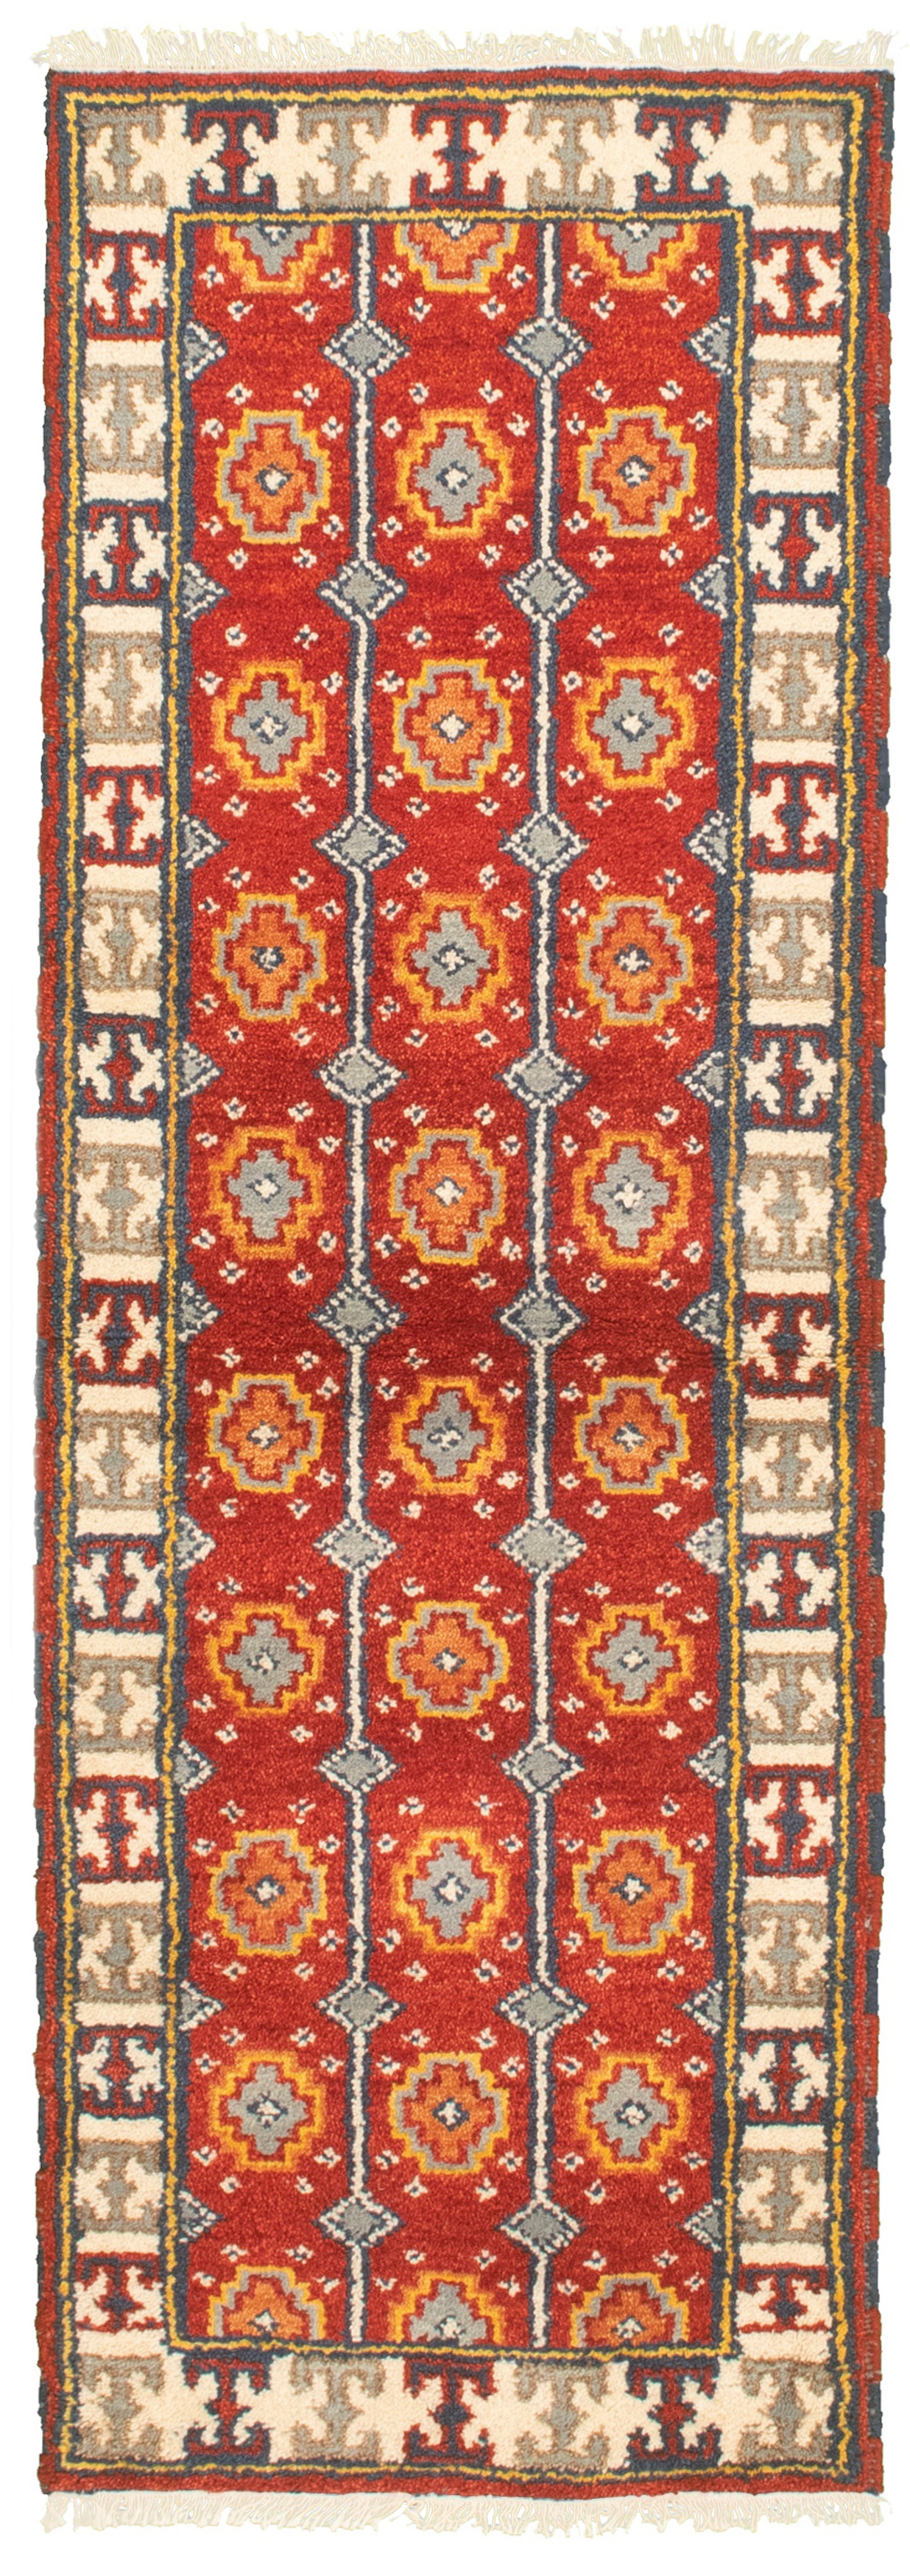 Hand-knotted Royal Kazak Dark Red Wool Rug 2'1" x 6'5"  Size: 2'1" x 6'5"  